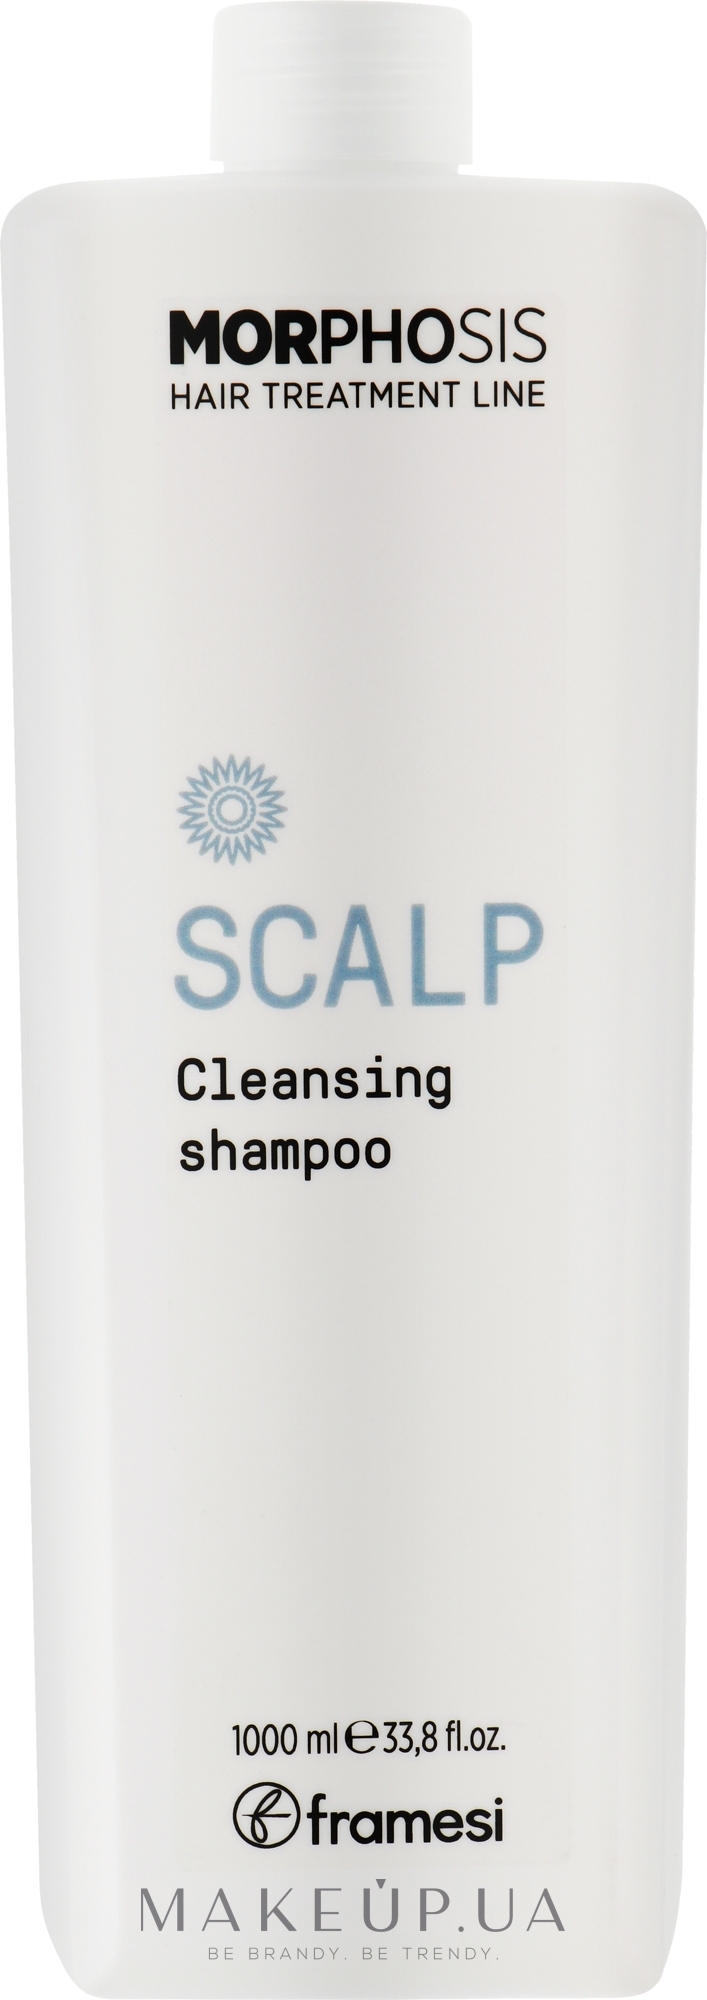 Очищающий шампунь для кожи головы - Framesi Morphosis Hair Treatment Line Scalp Cleansing Shampoo — фото 1000ml